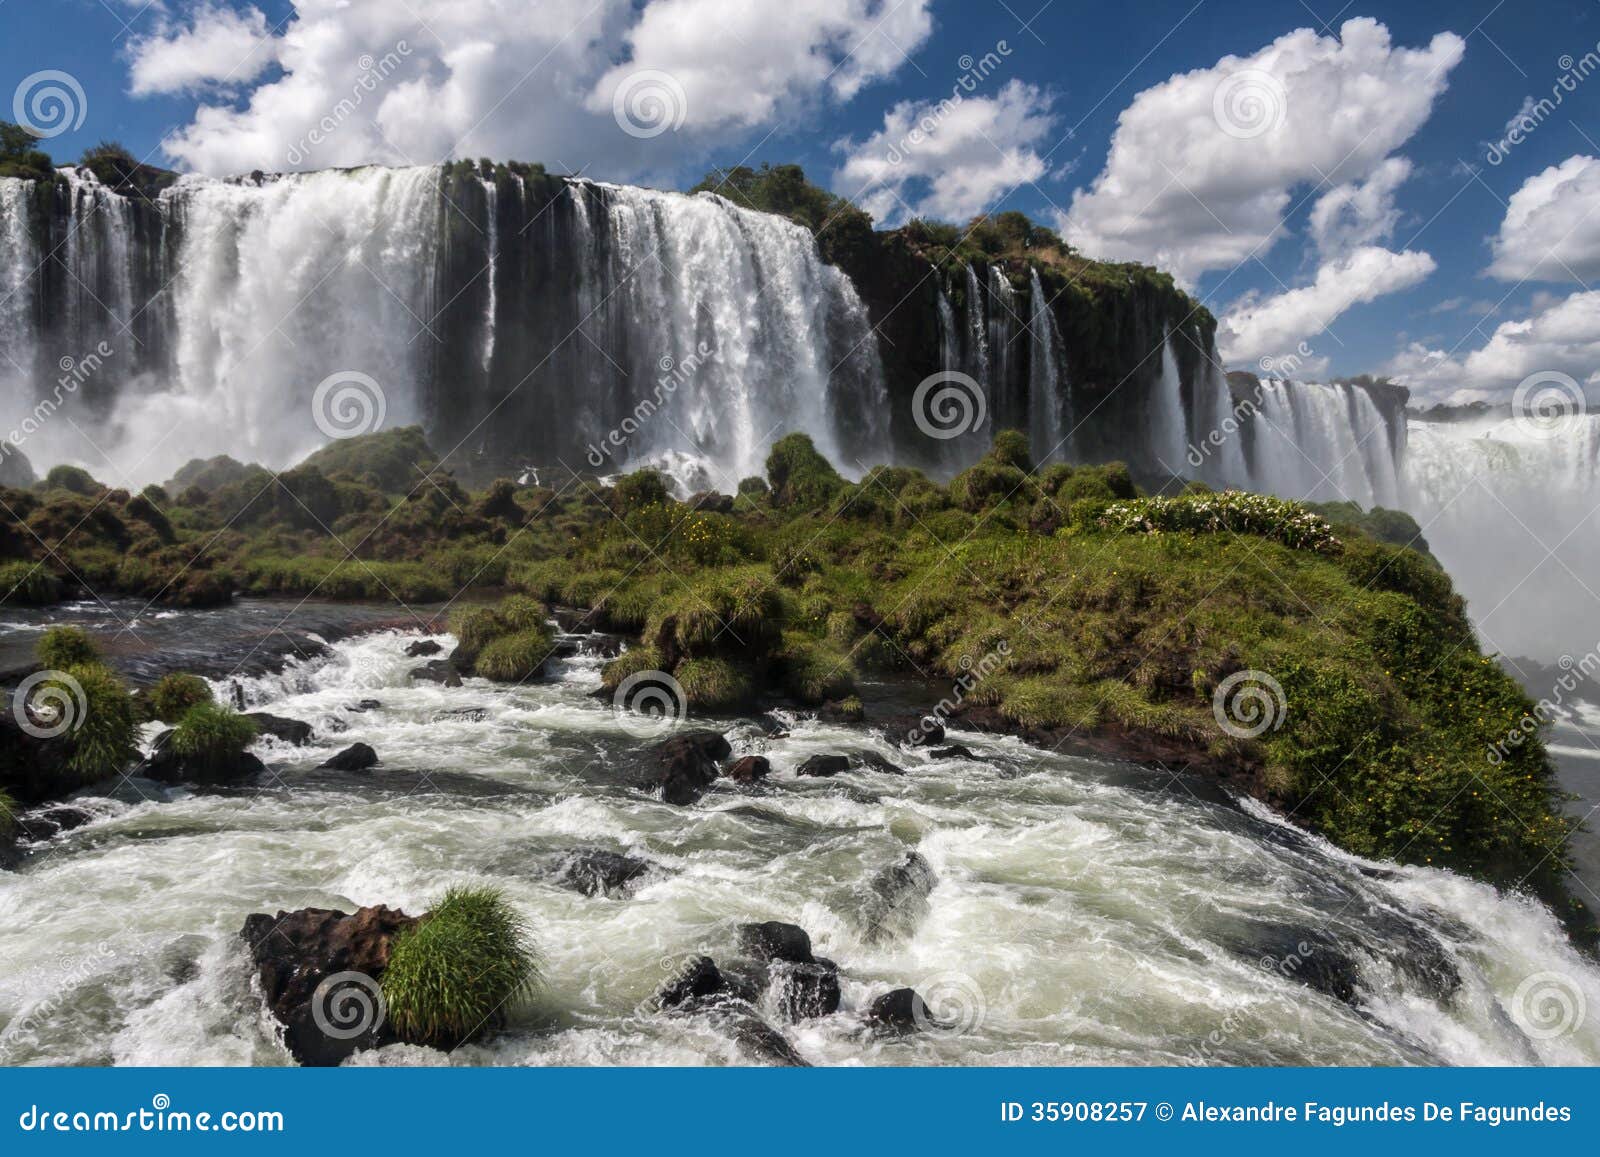 foz do iguassu falls argentina brazil